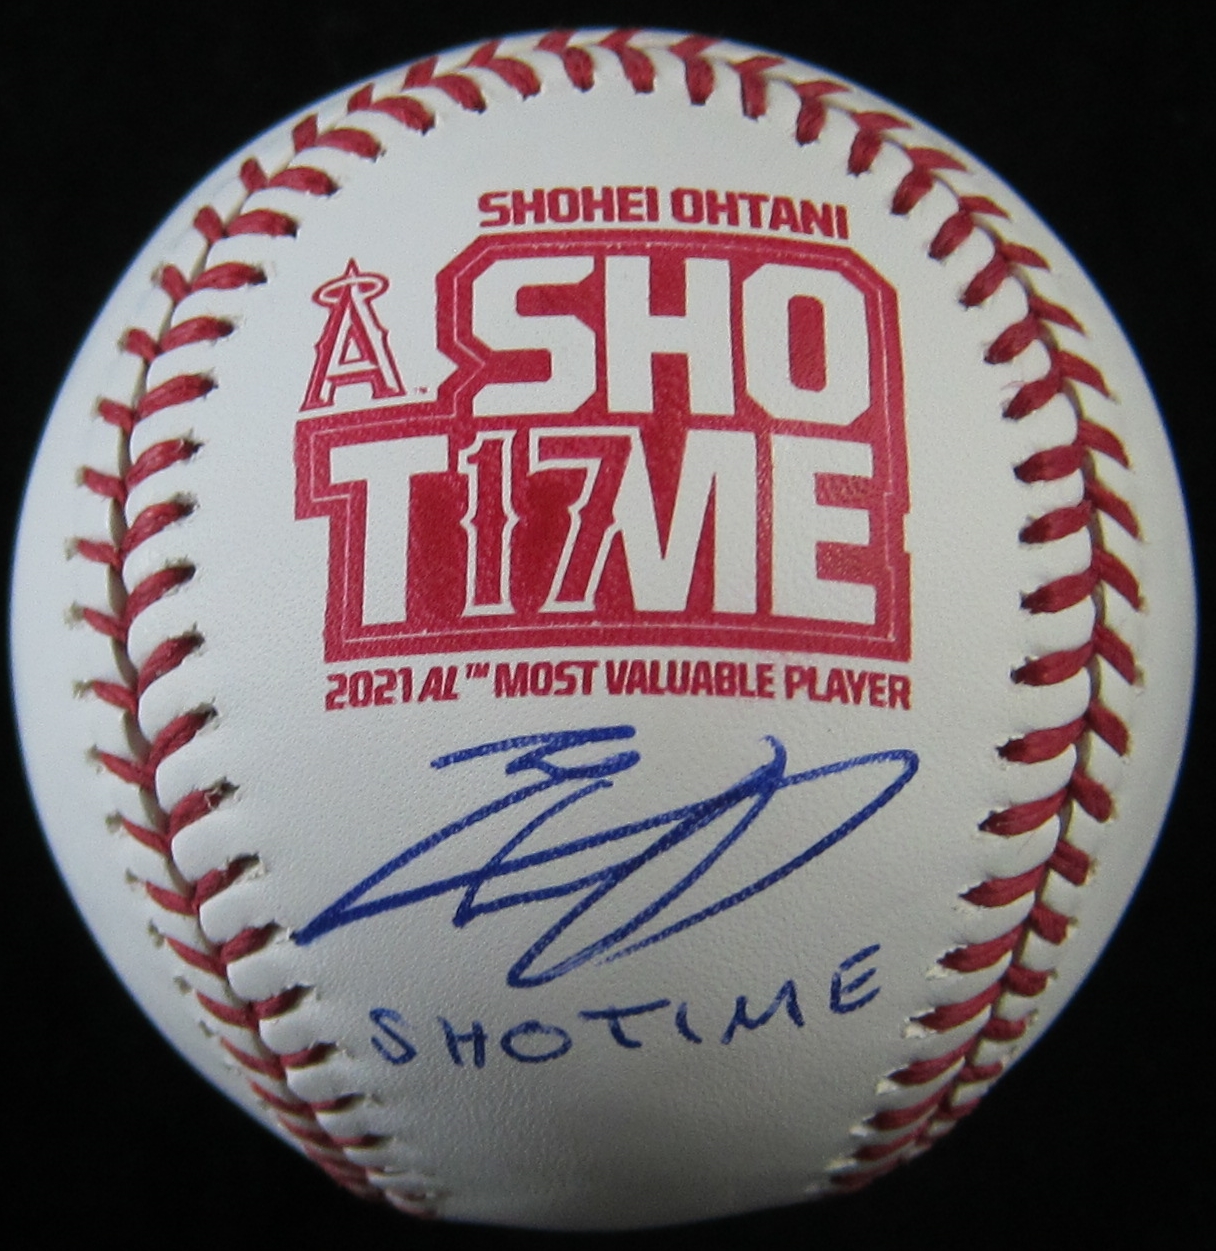 Shohei Ohtani Signed & Inscribed Baseball